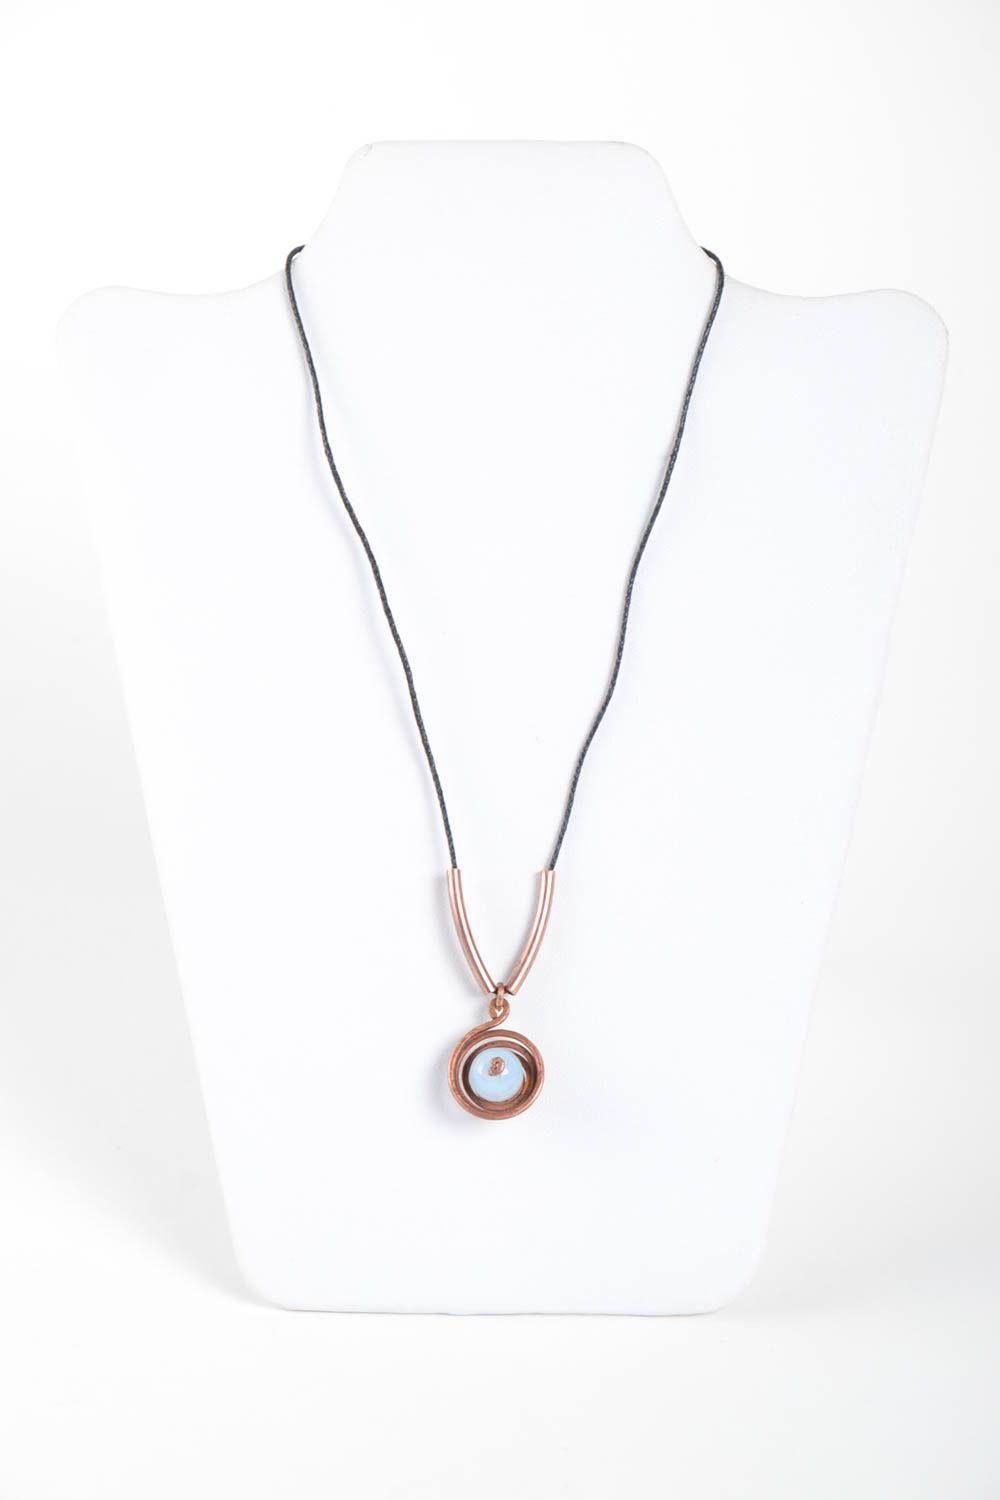 Handmade pendant metal pendant unusual jewelry designer accessory gift for her photo 2